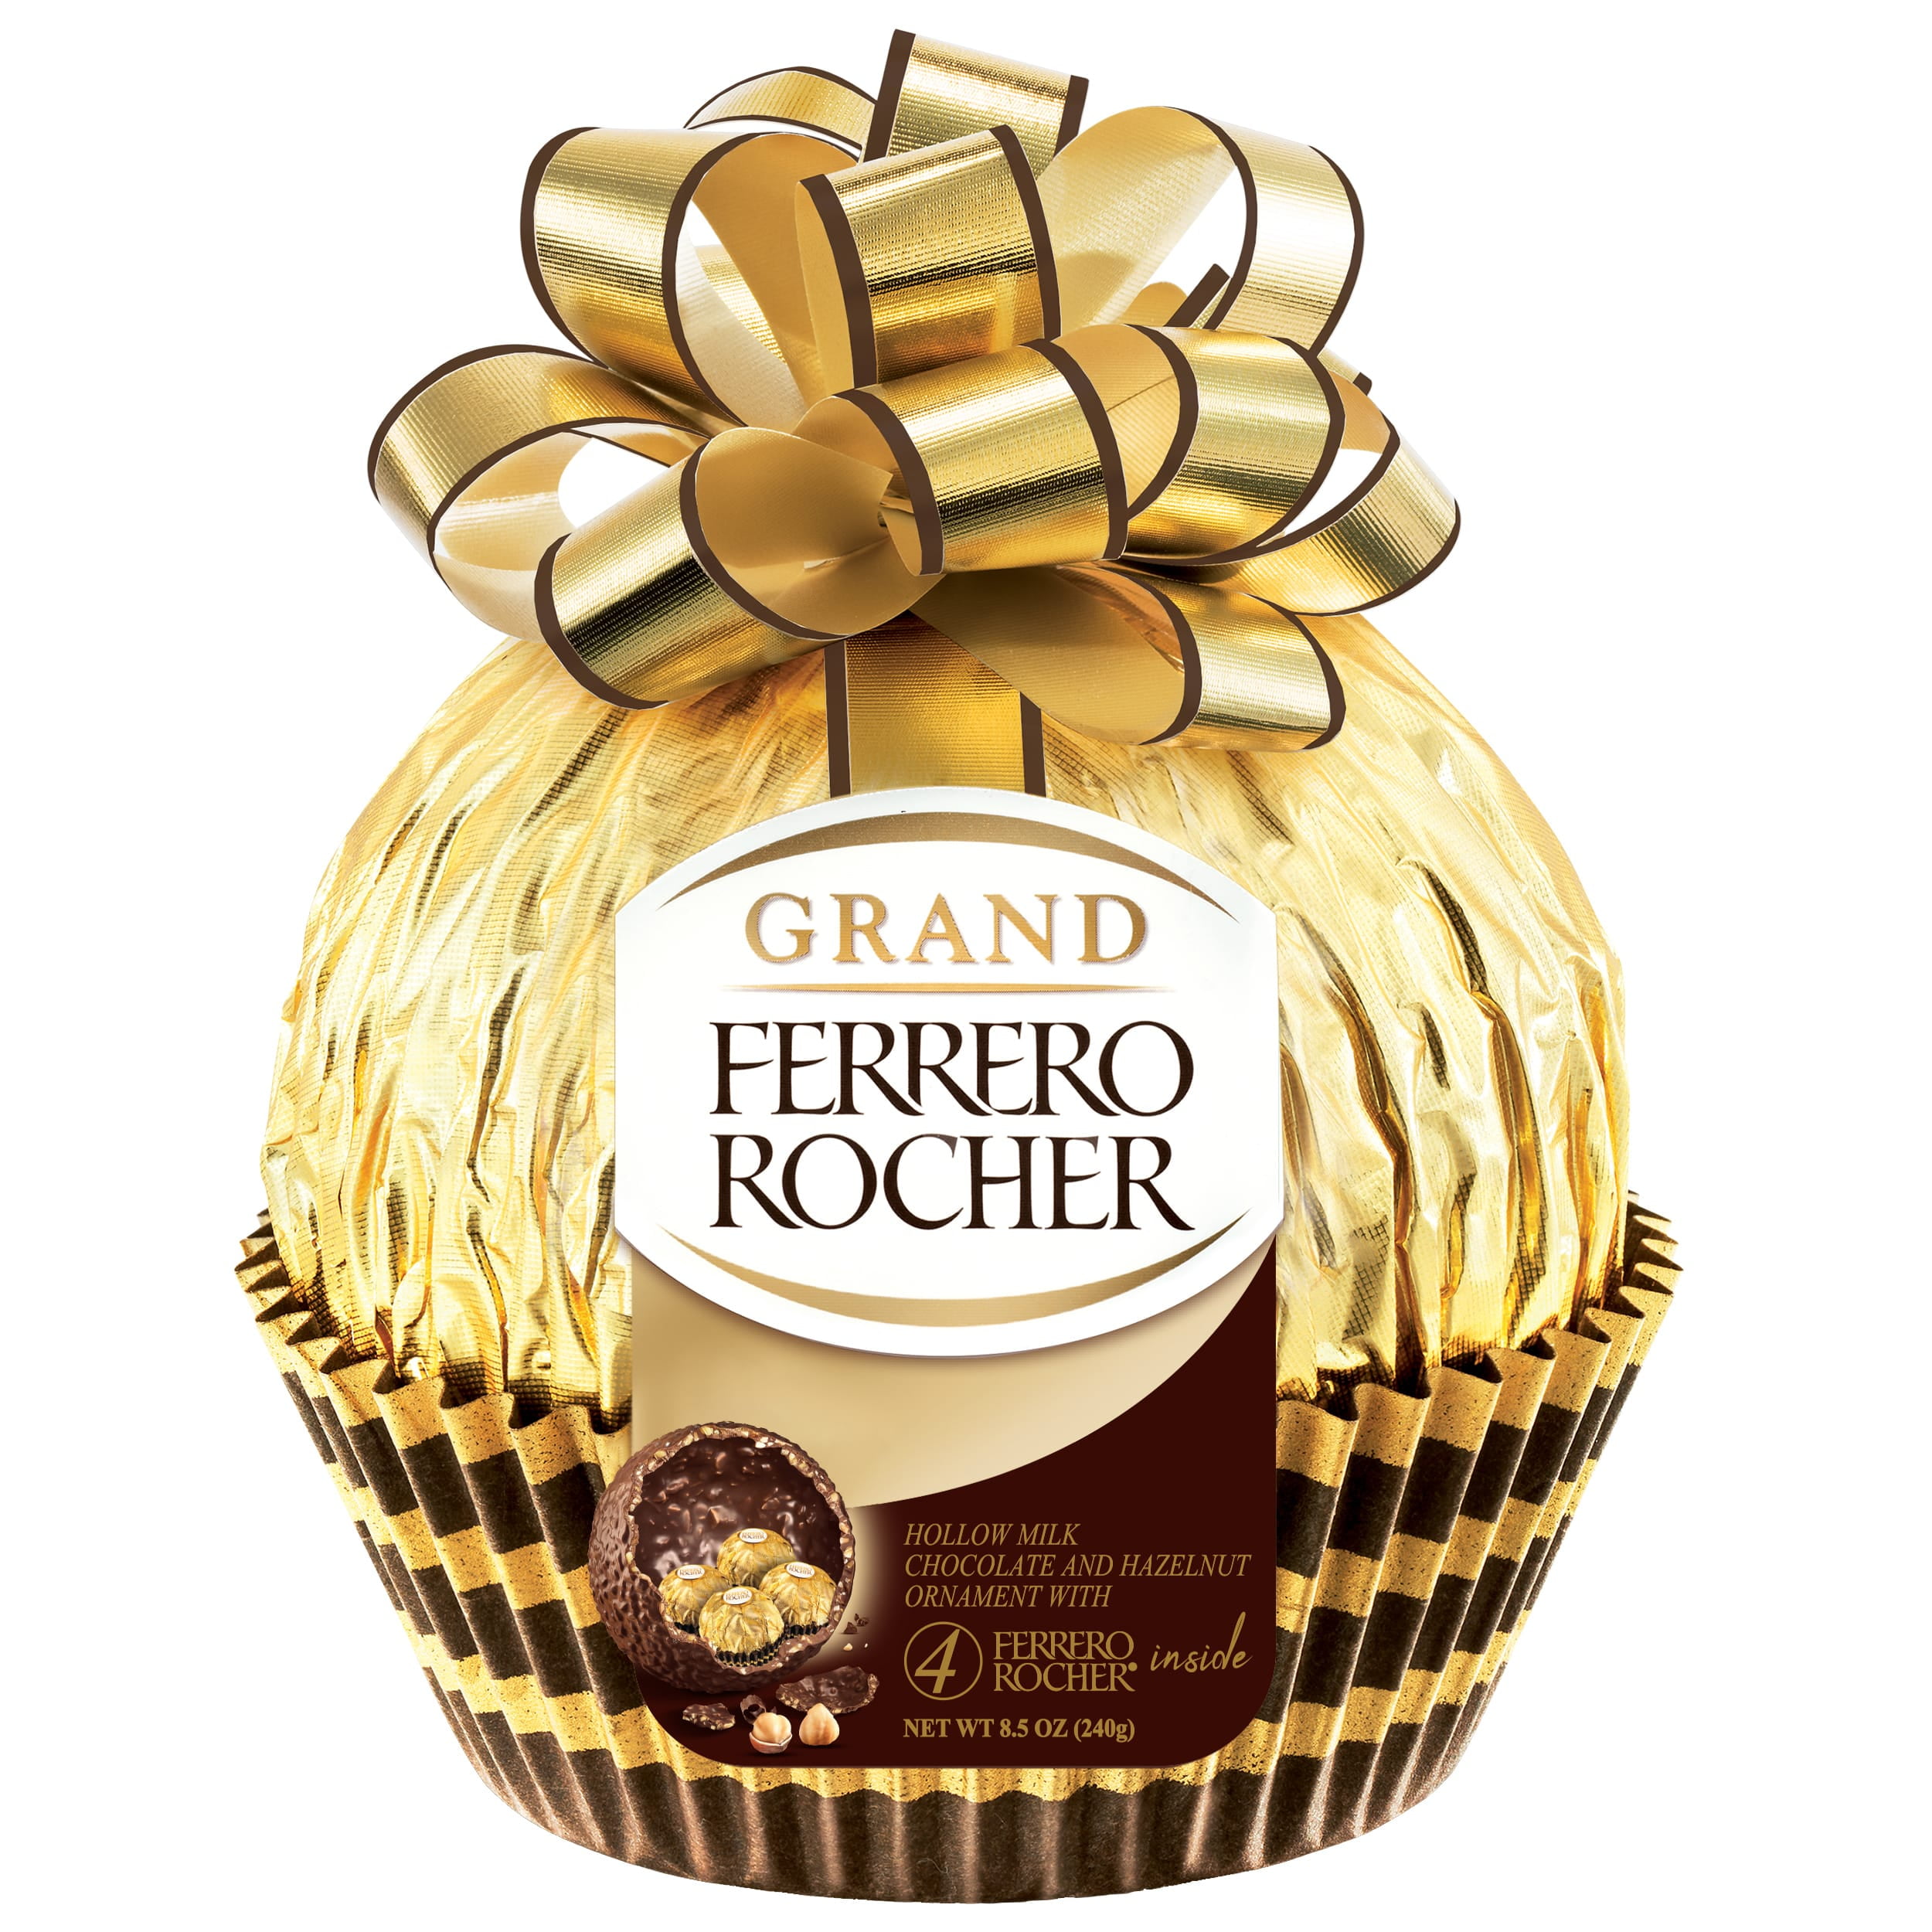 Grand Ferrero Rocher Premium Gourmet Milk Chocolate Hazelnut, A Great Easter Gift, 8.5 oz